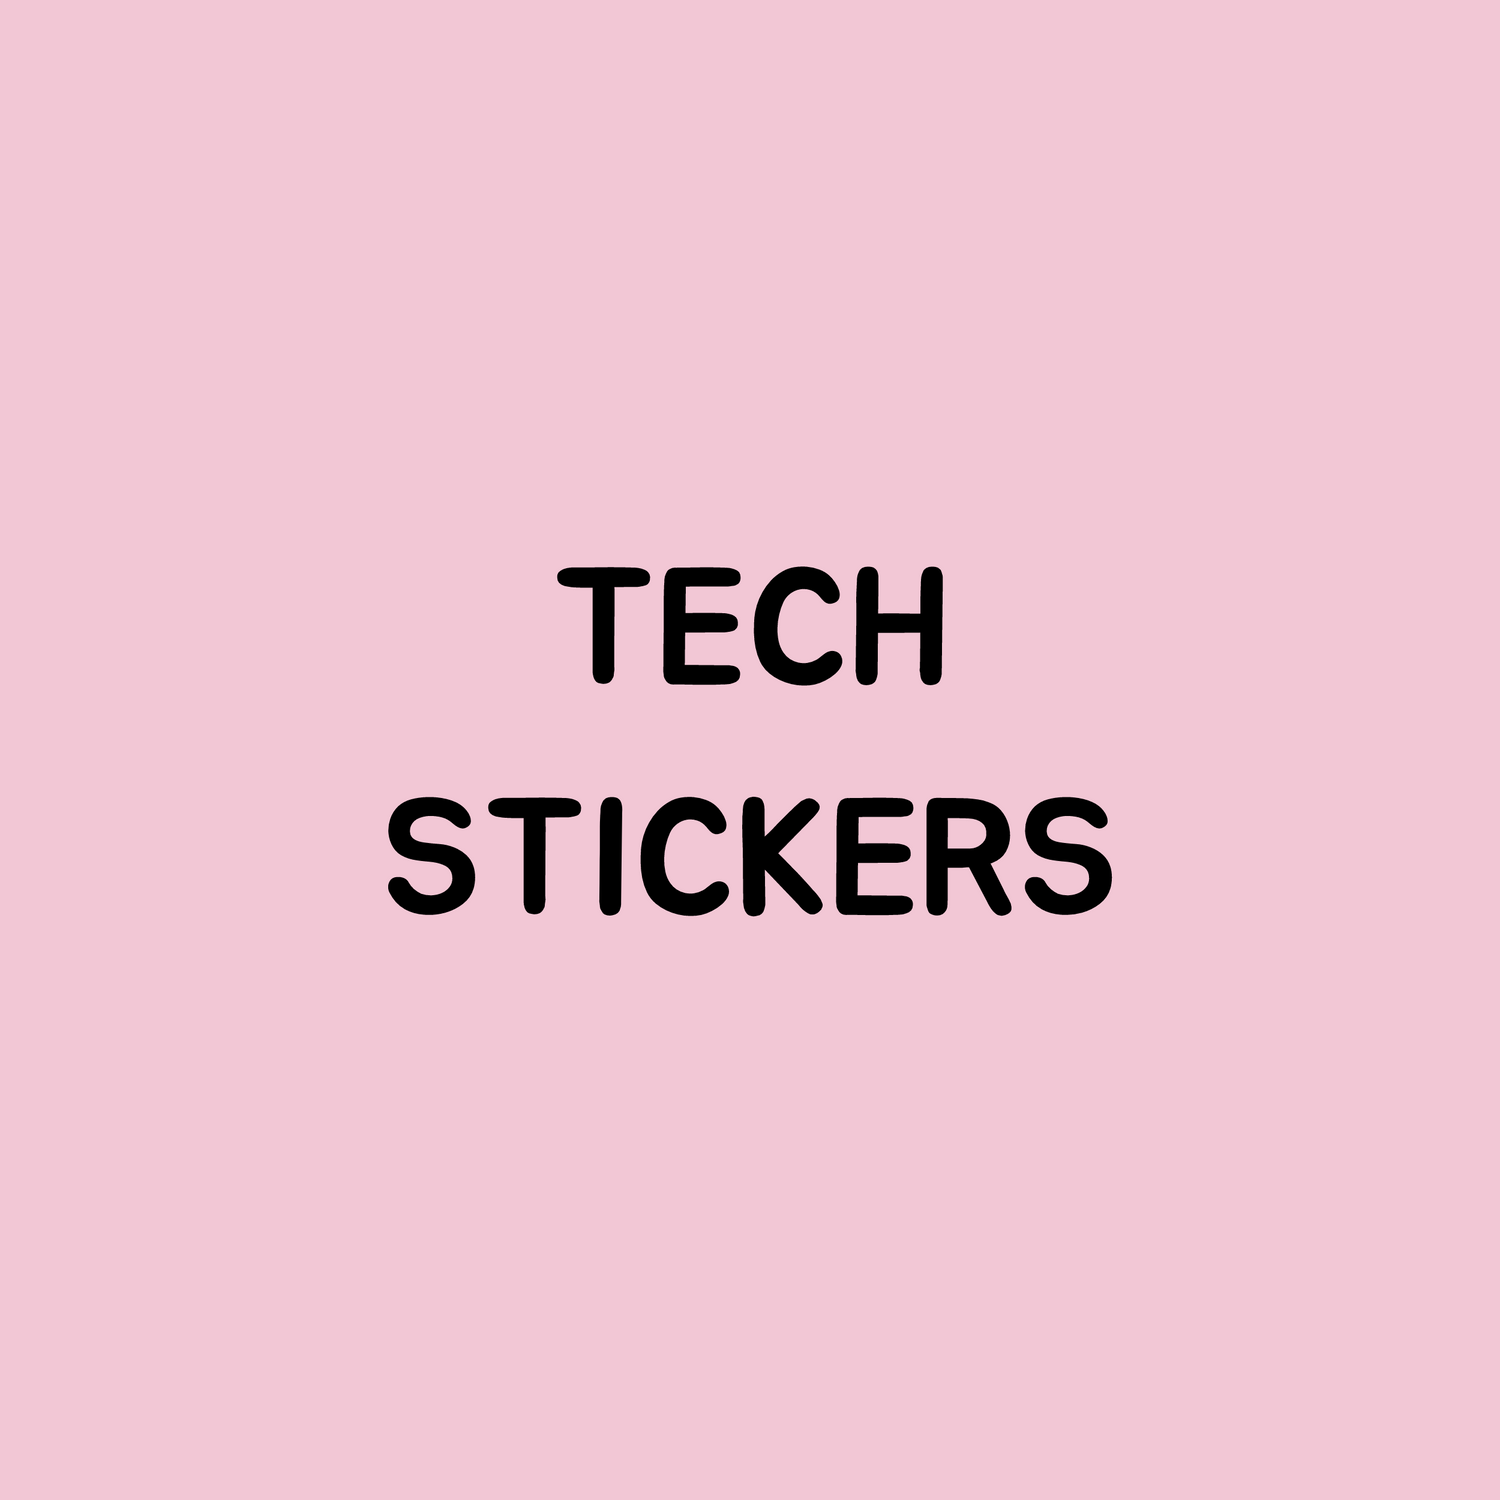 Tech stickers